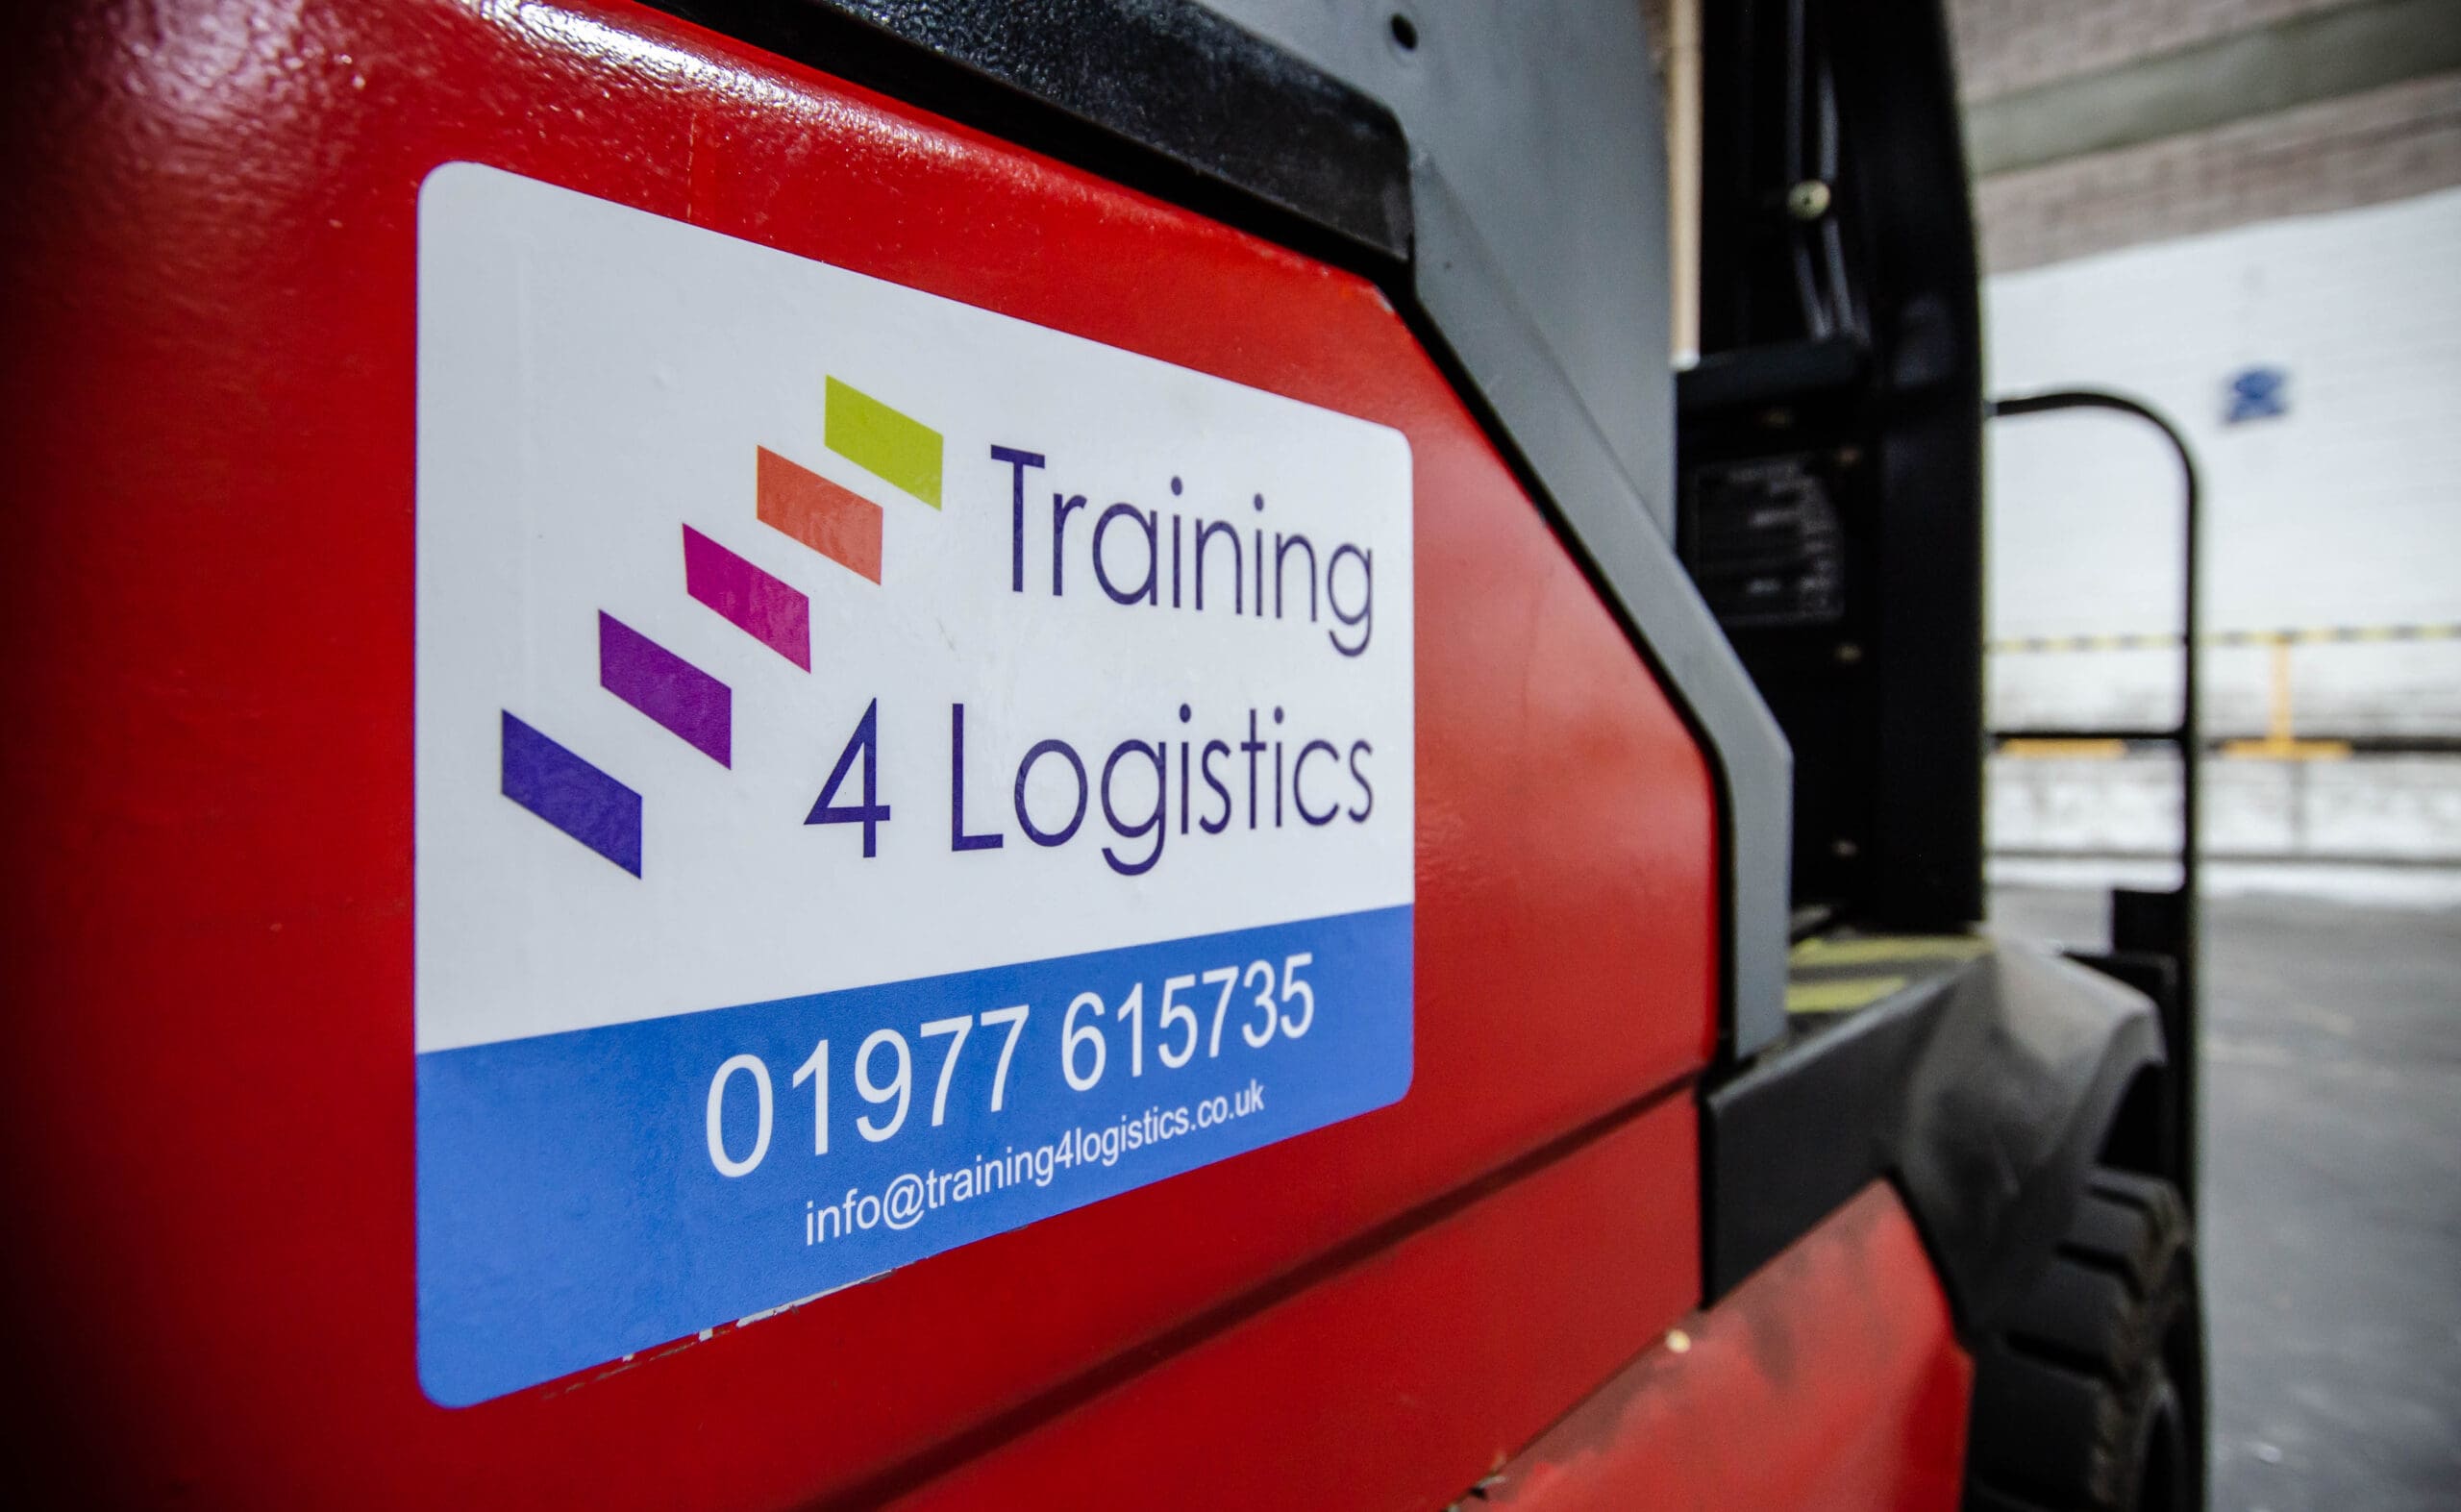 Forklift with training 4 logistics logo displayed